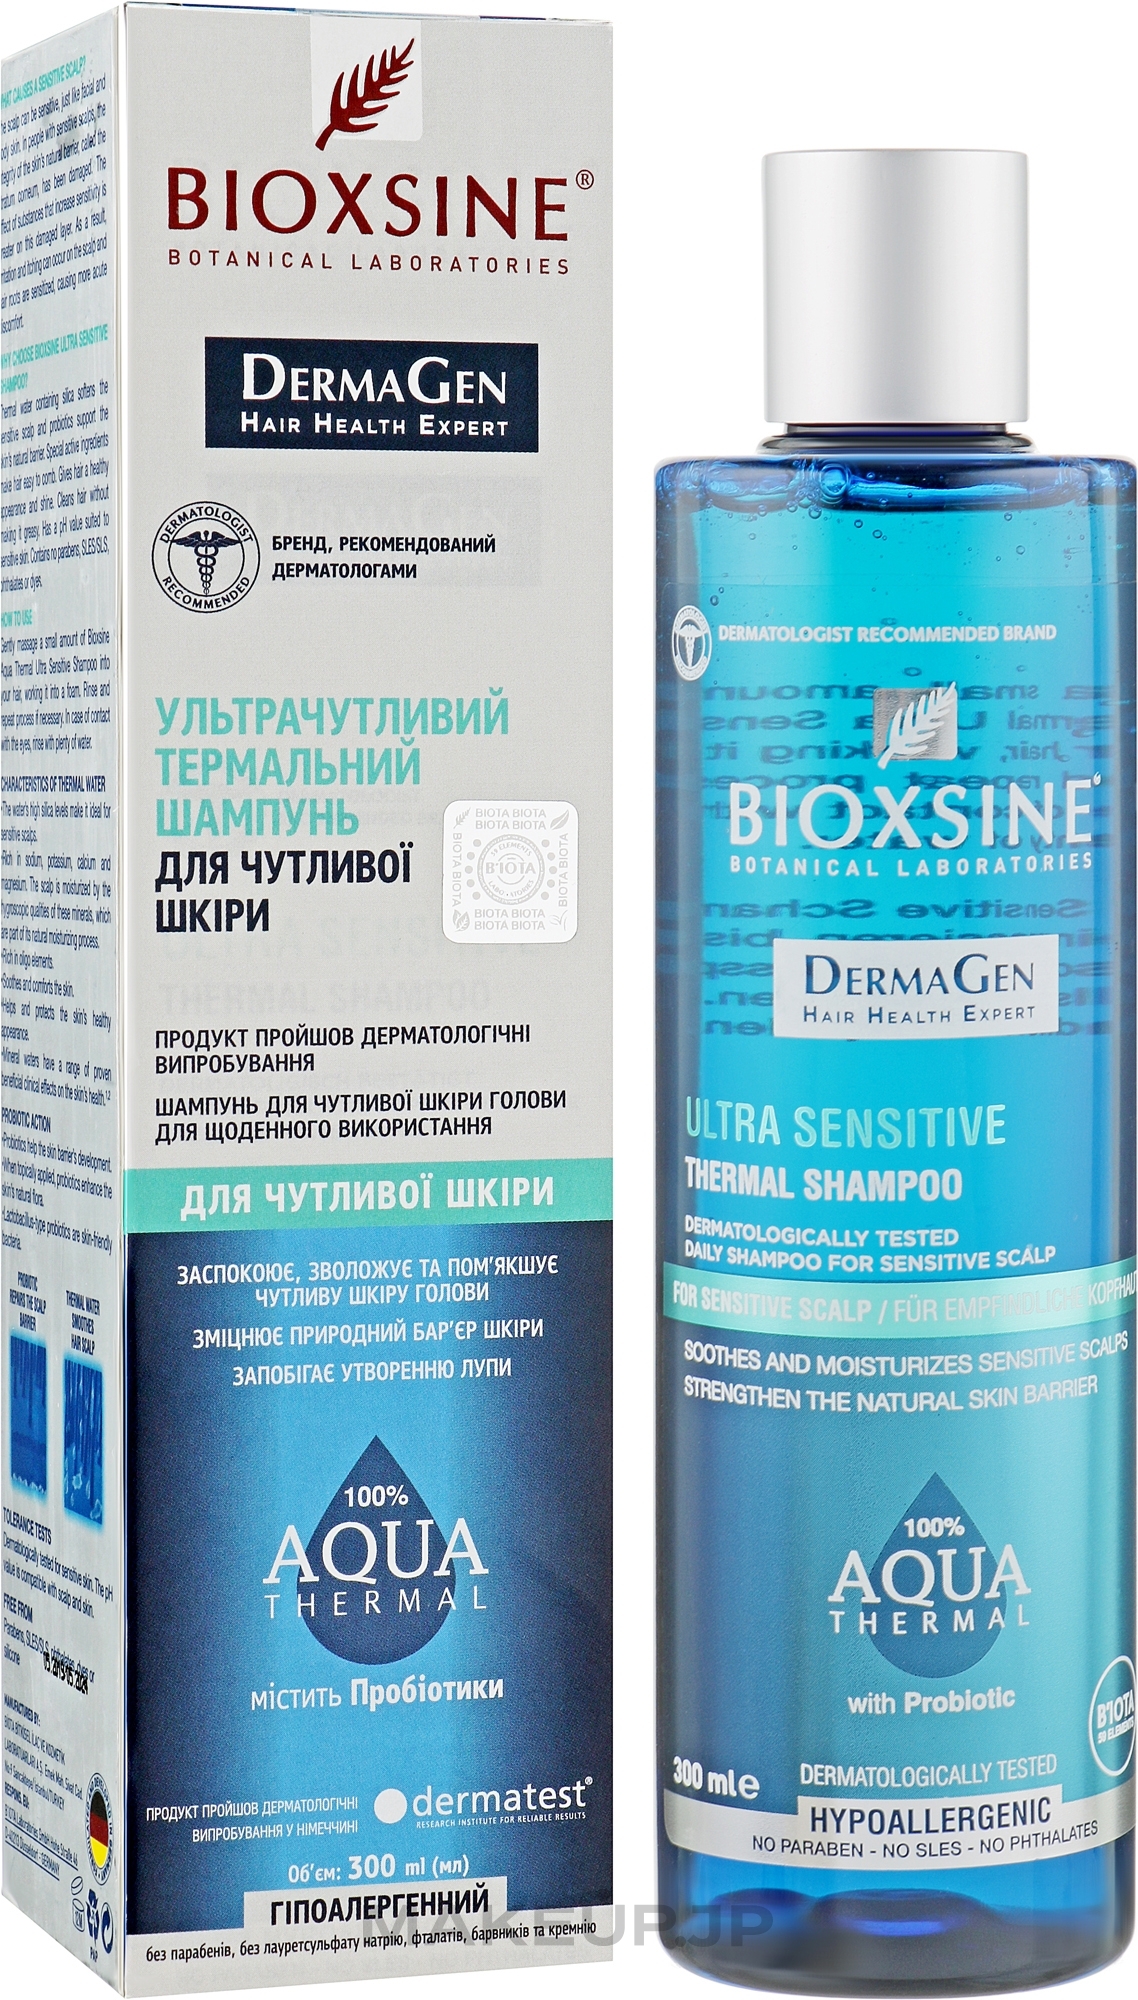 Ultra-Sensitive Thermal Shampoo for Sensitive Scalp - Biota Bioxsine DermaGen Aqua Thermal Ultra Sensitive Thermal Shampoo — photo 300 ml